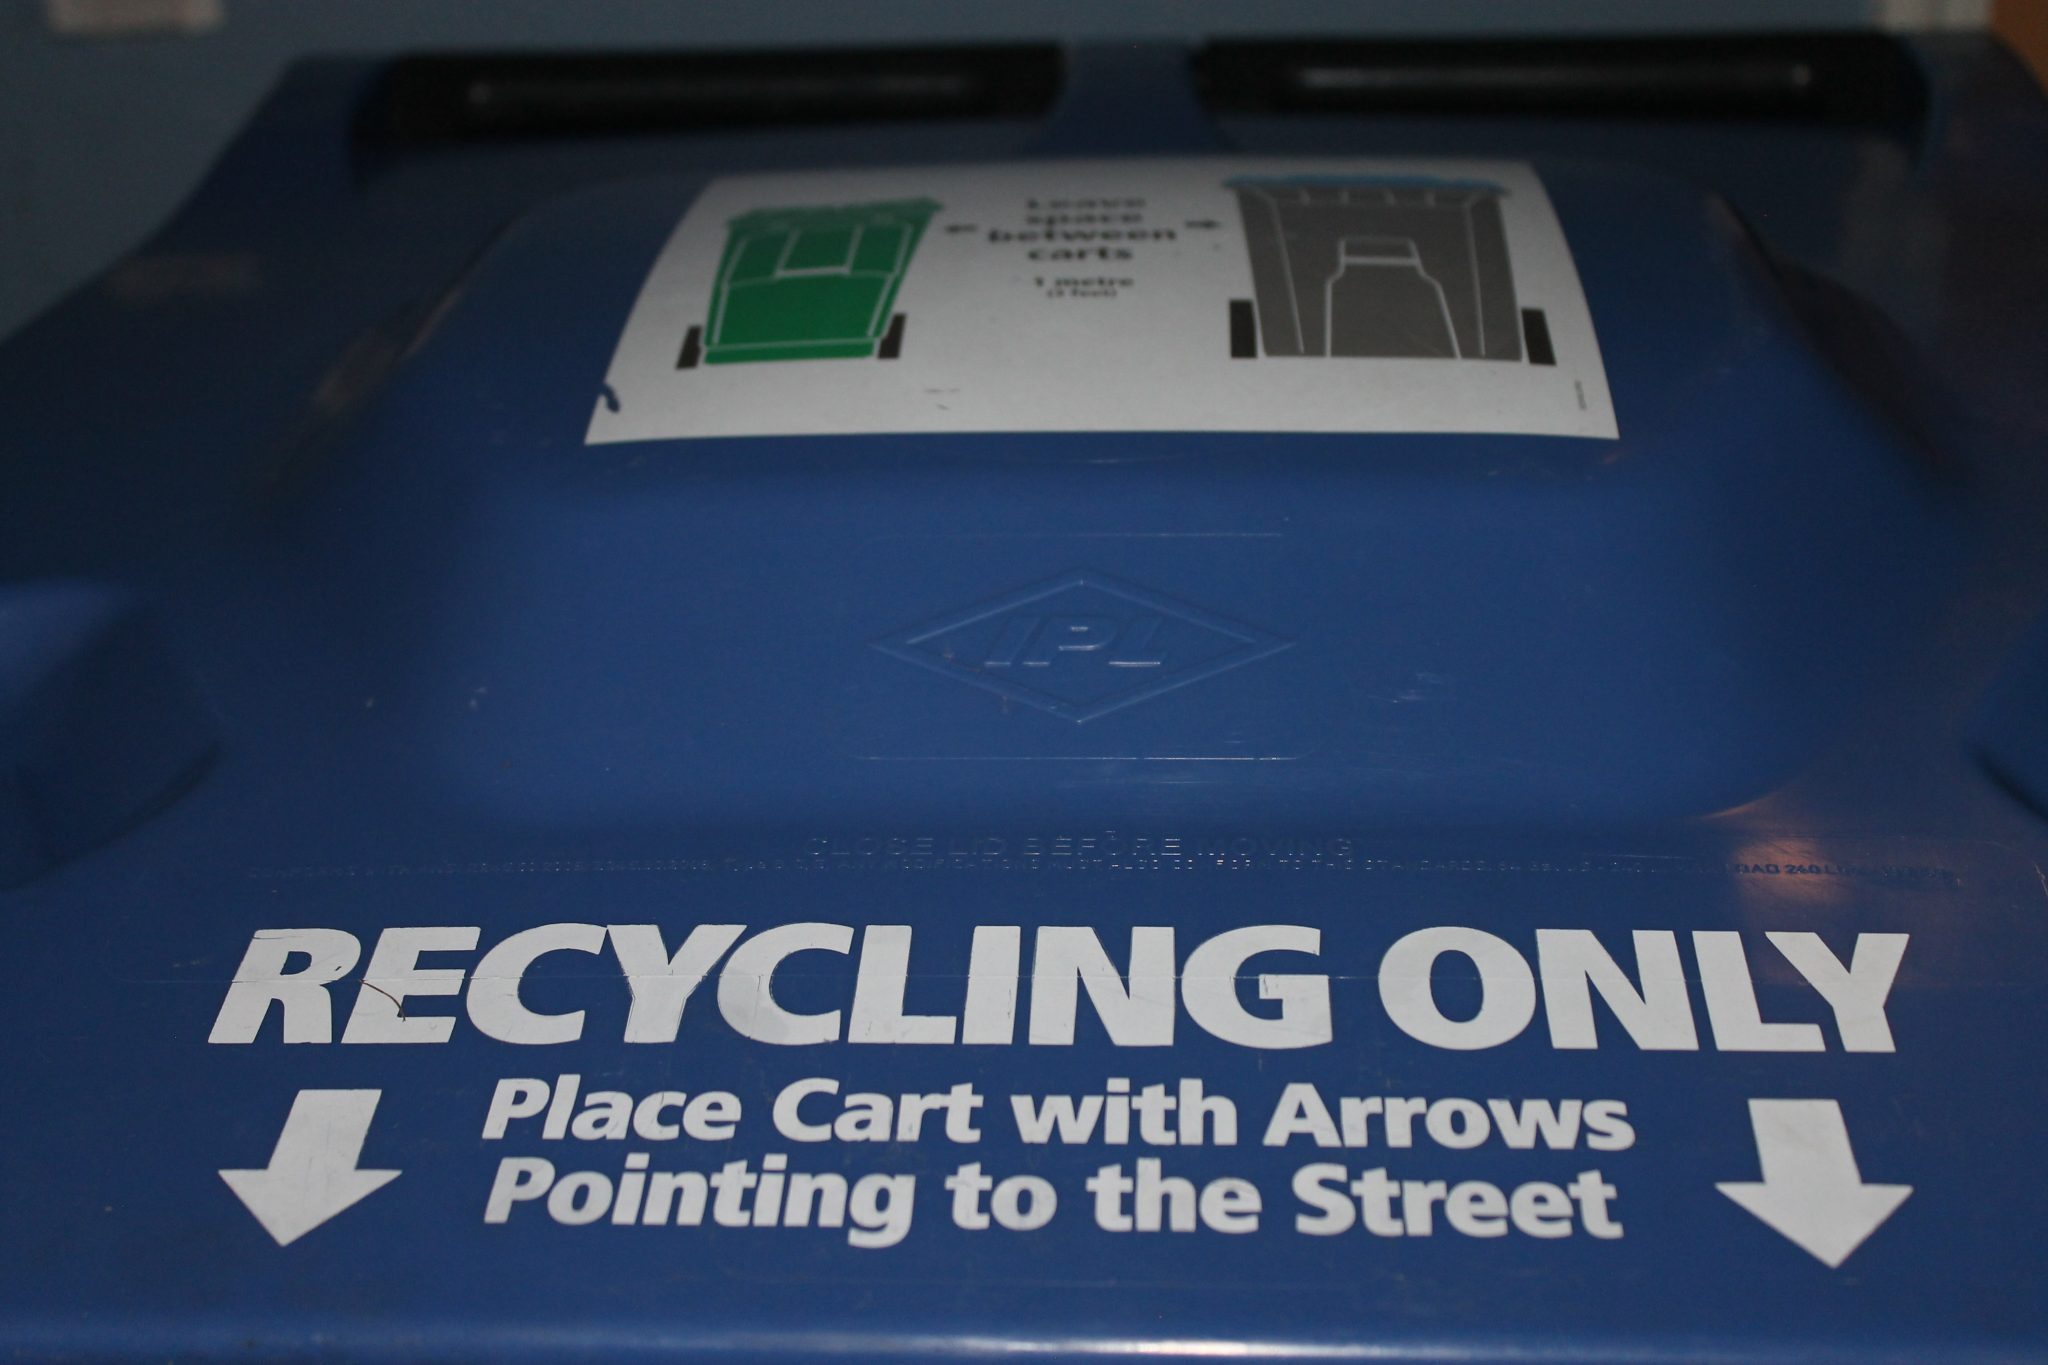 Top of a recycling bin